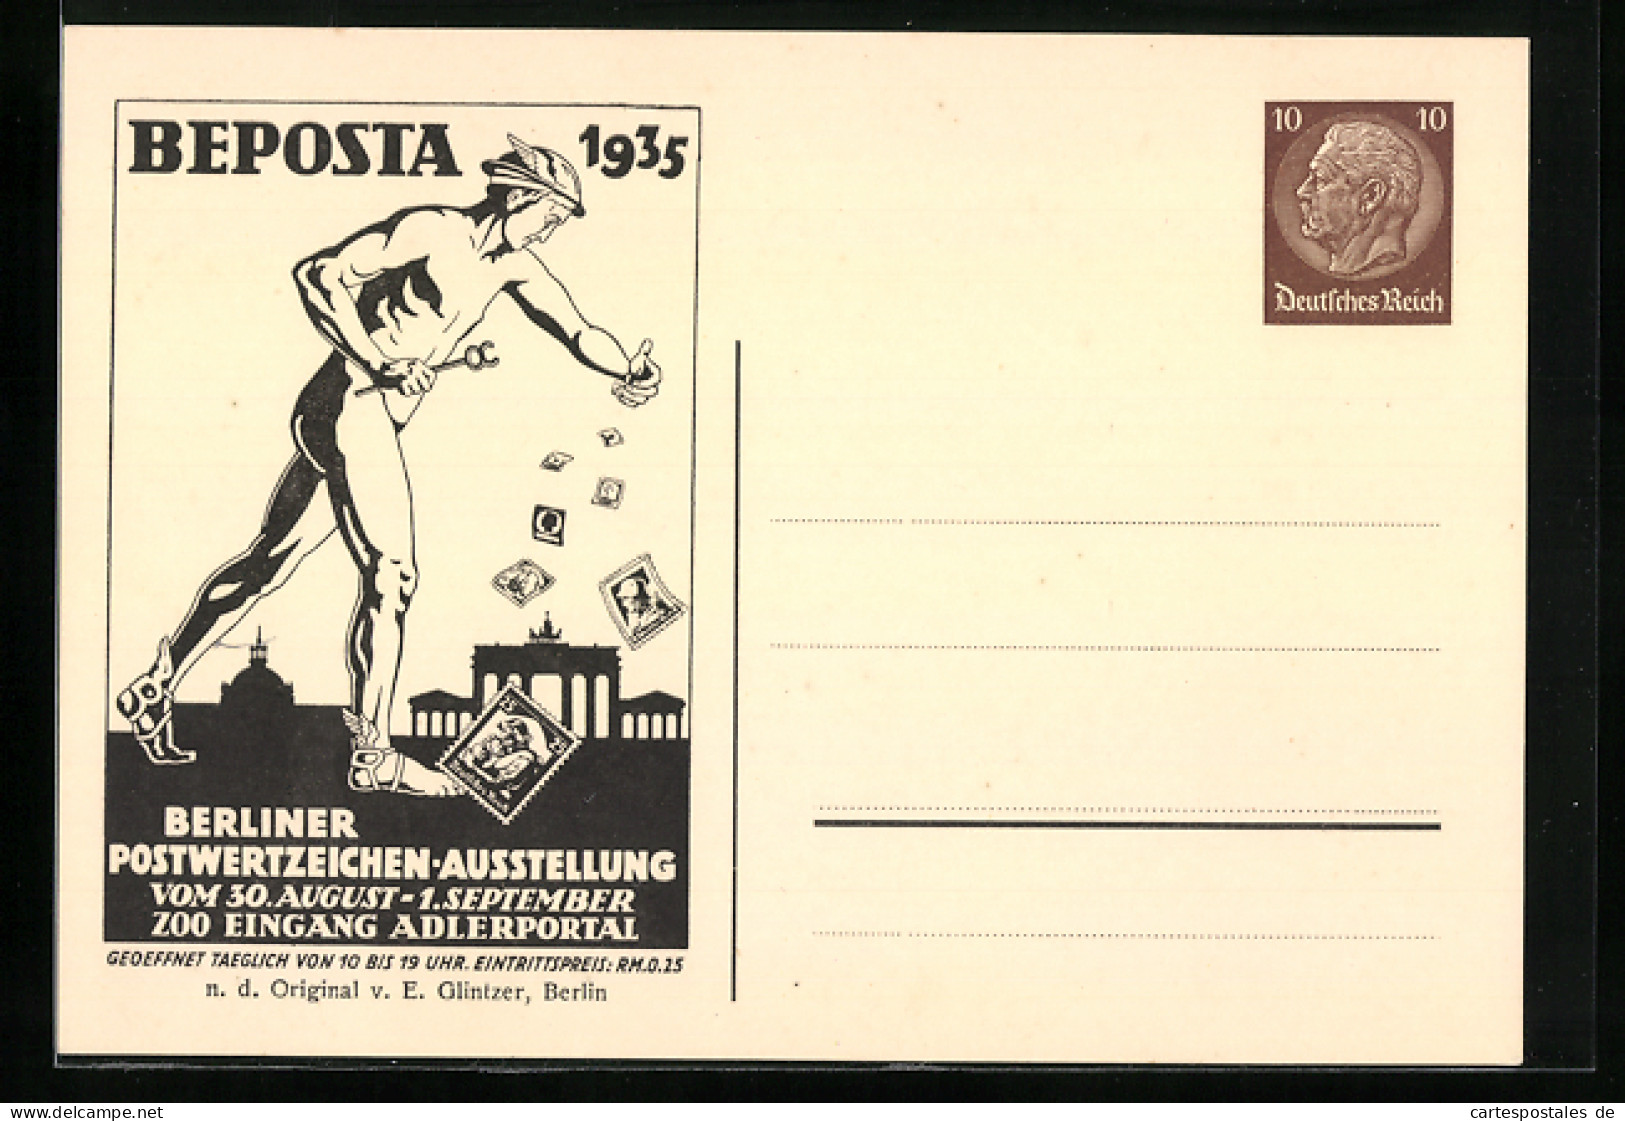 AK Berlin, Berliner Postwertzeichen-Ausstellung Beposta 1935, Ganzsache 10 Pfg.  - Postcards